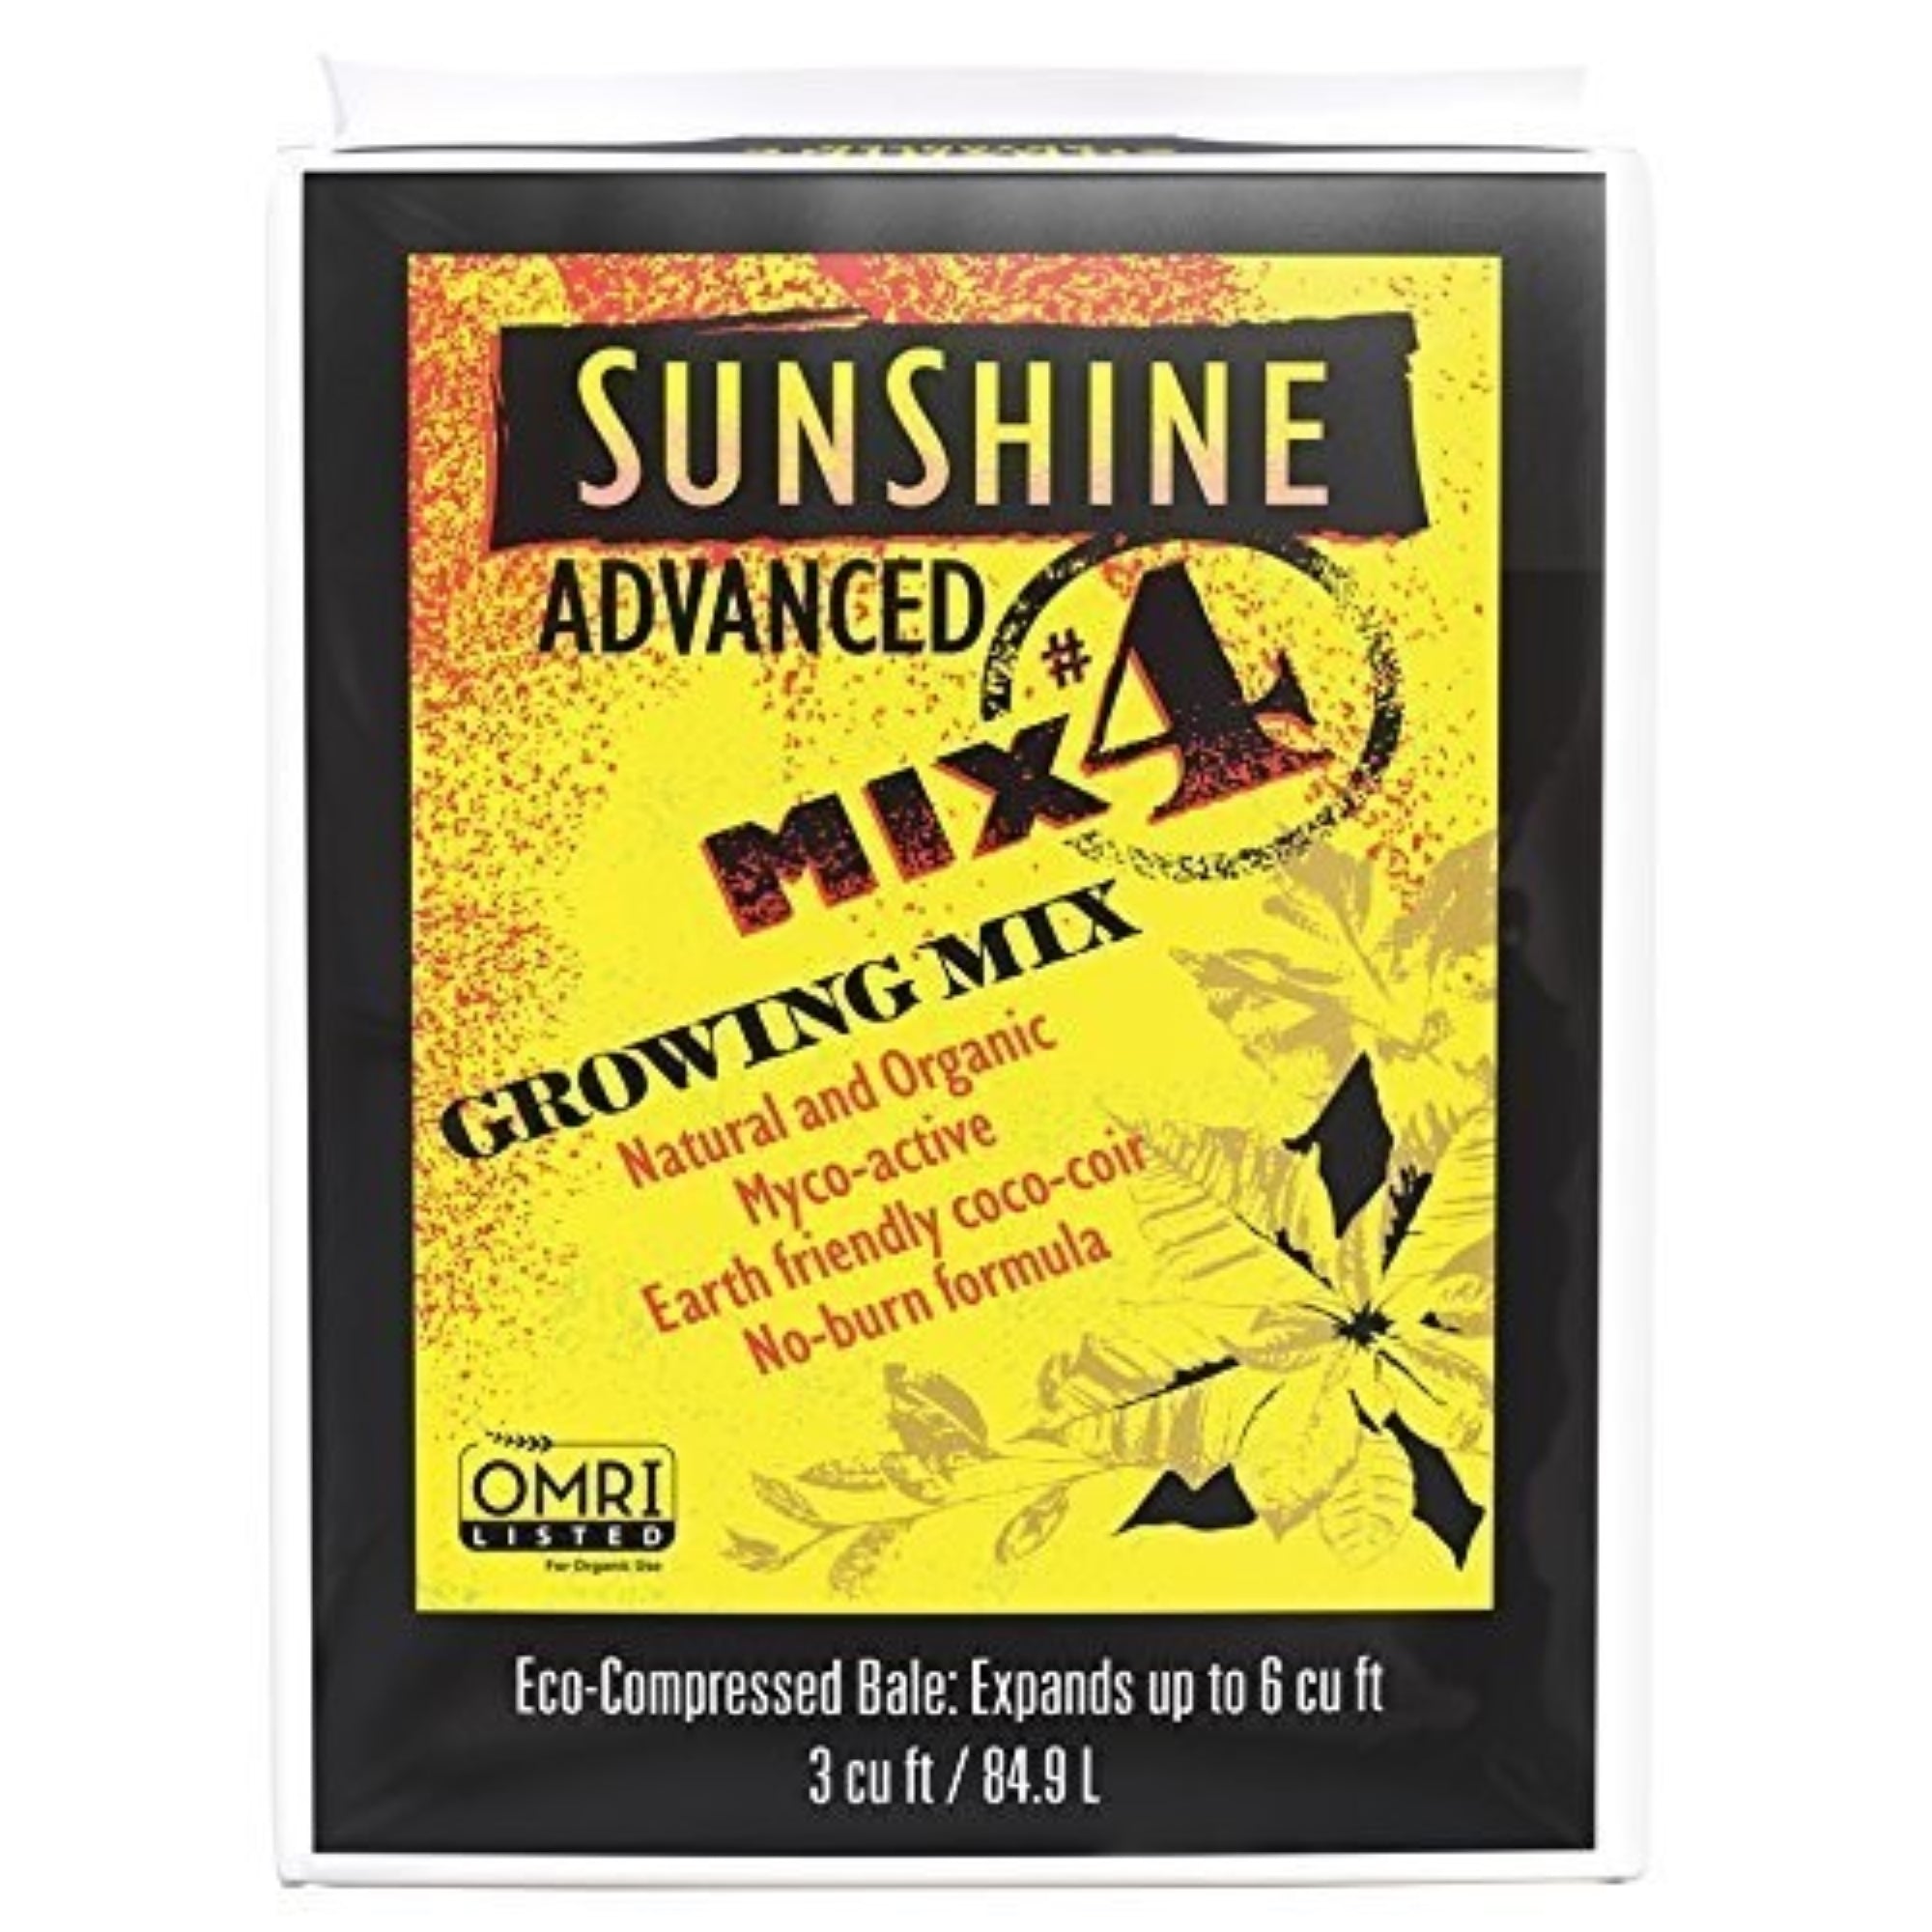 Sunshine Advanced Growing Mix #4, 3 Cu Ft Compressed